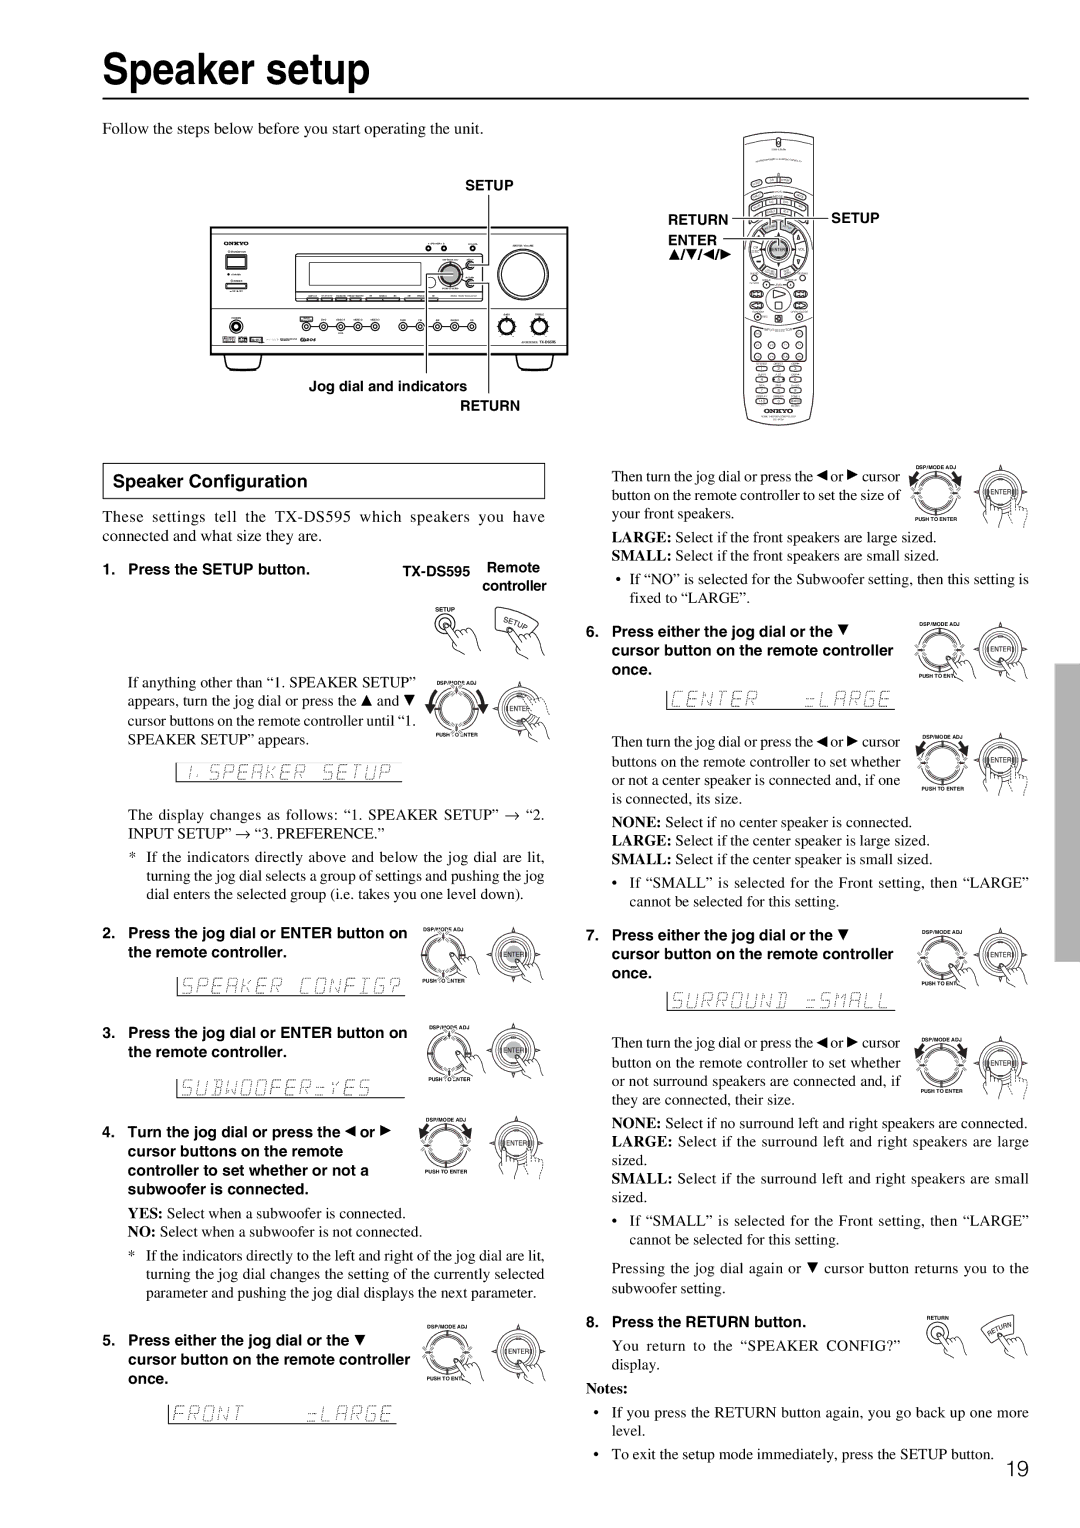 Onkyo TX-DS595 appendix Speaker setup, Speaker Configuration, Setup, Return, Enter 